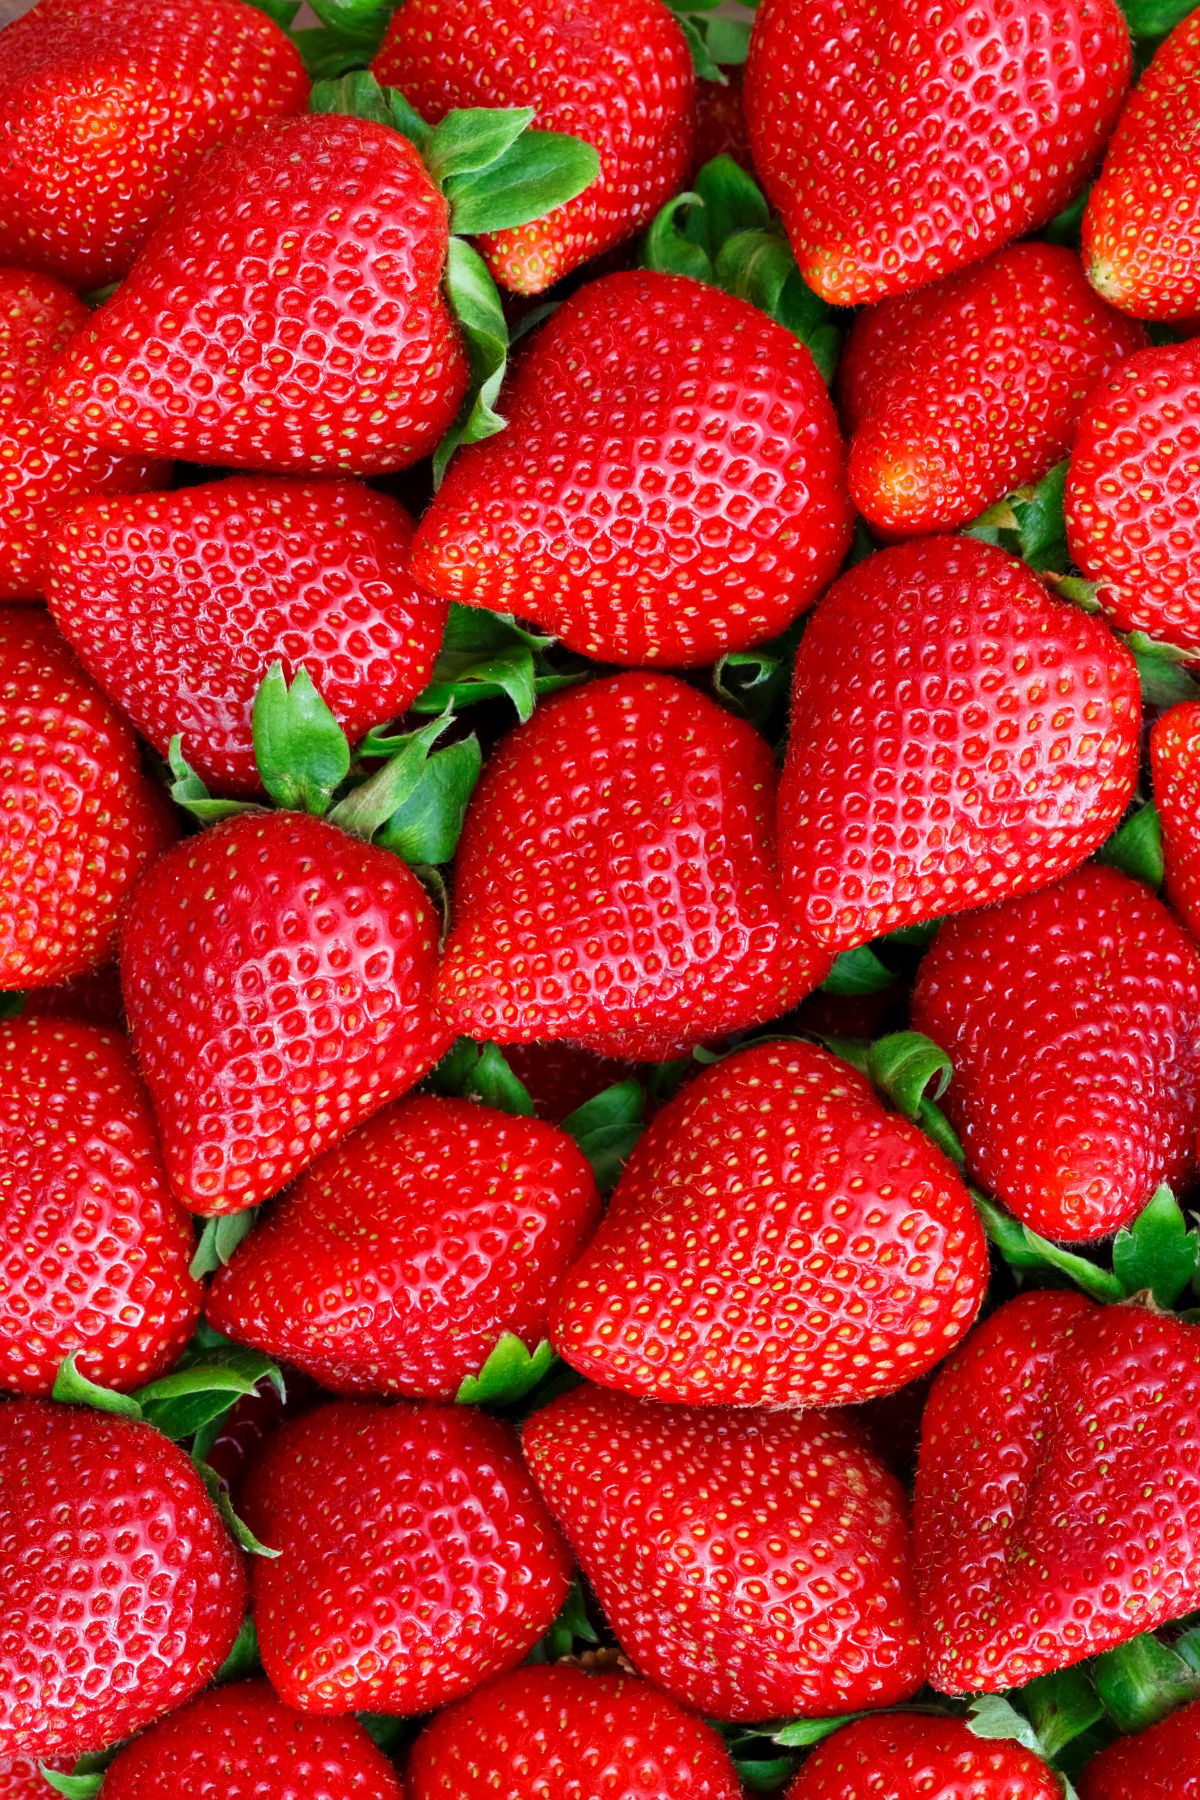 keto-friendly strawberries